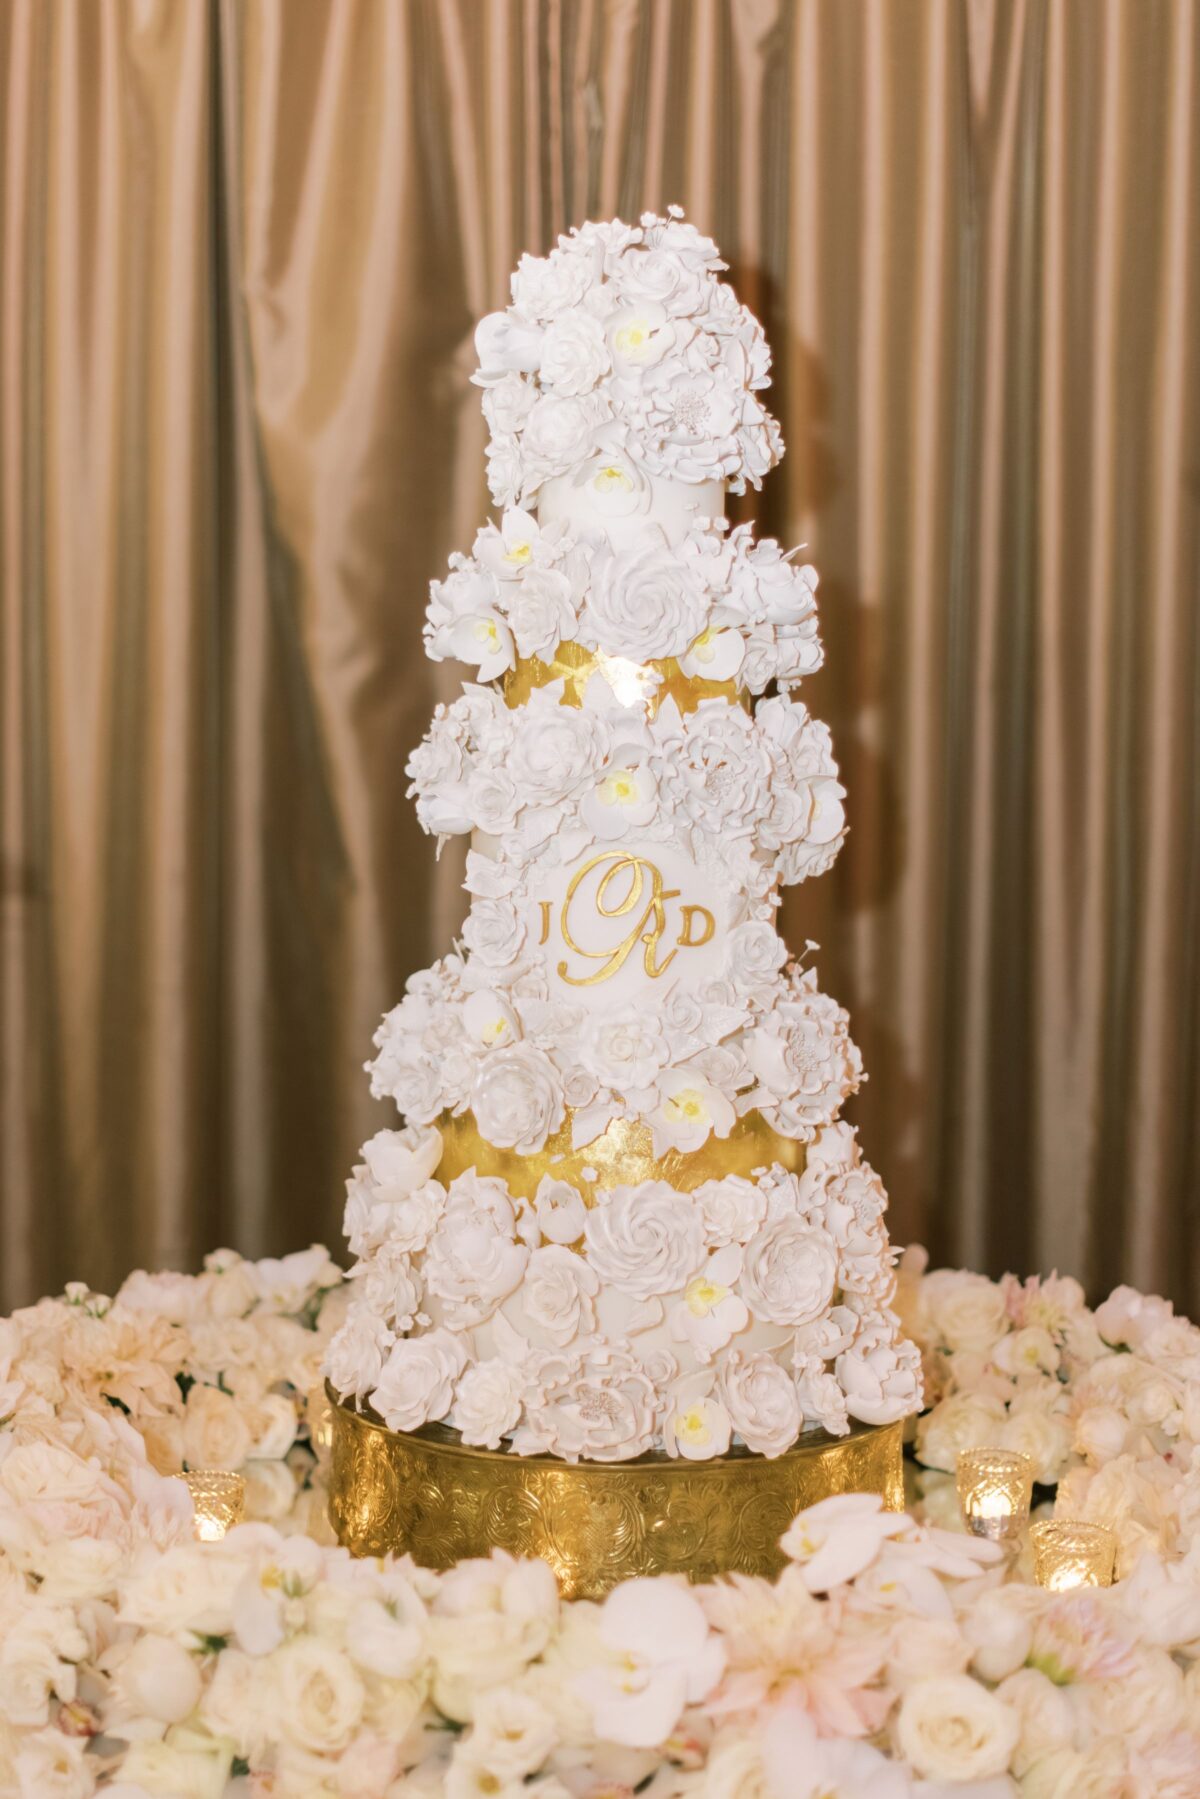 White and gold wedding cake - Photography: Brooke Images